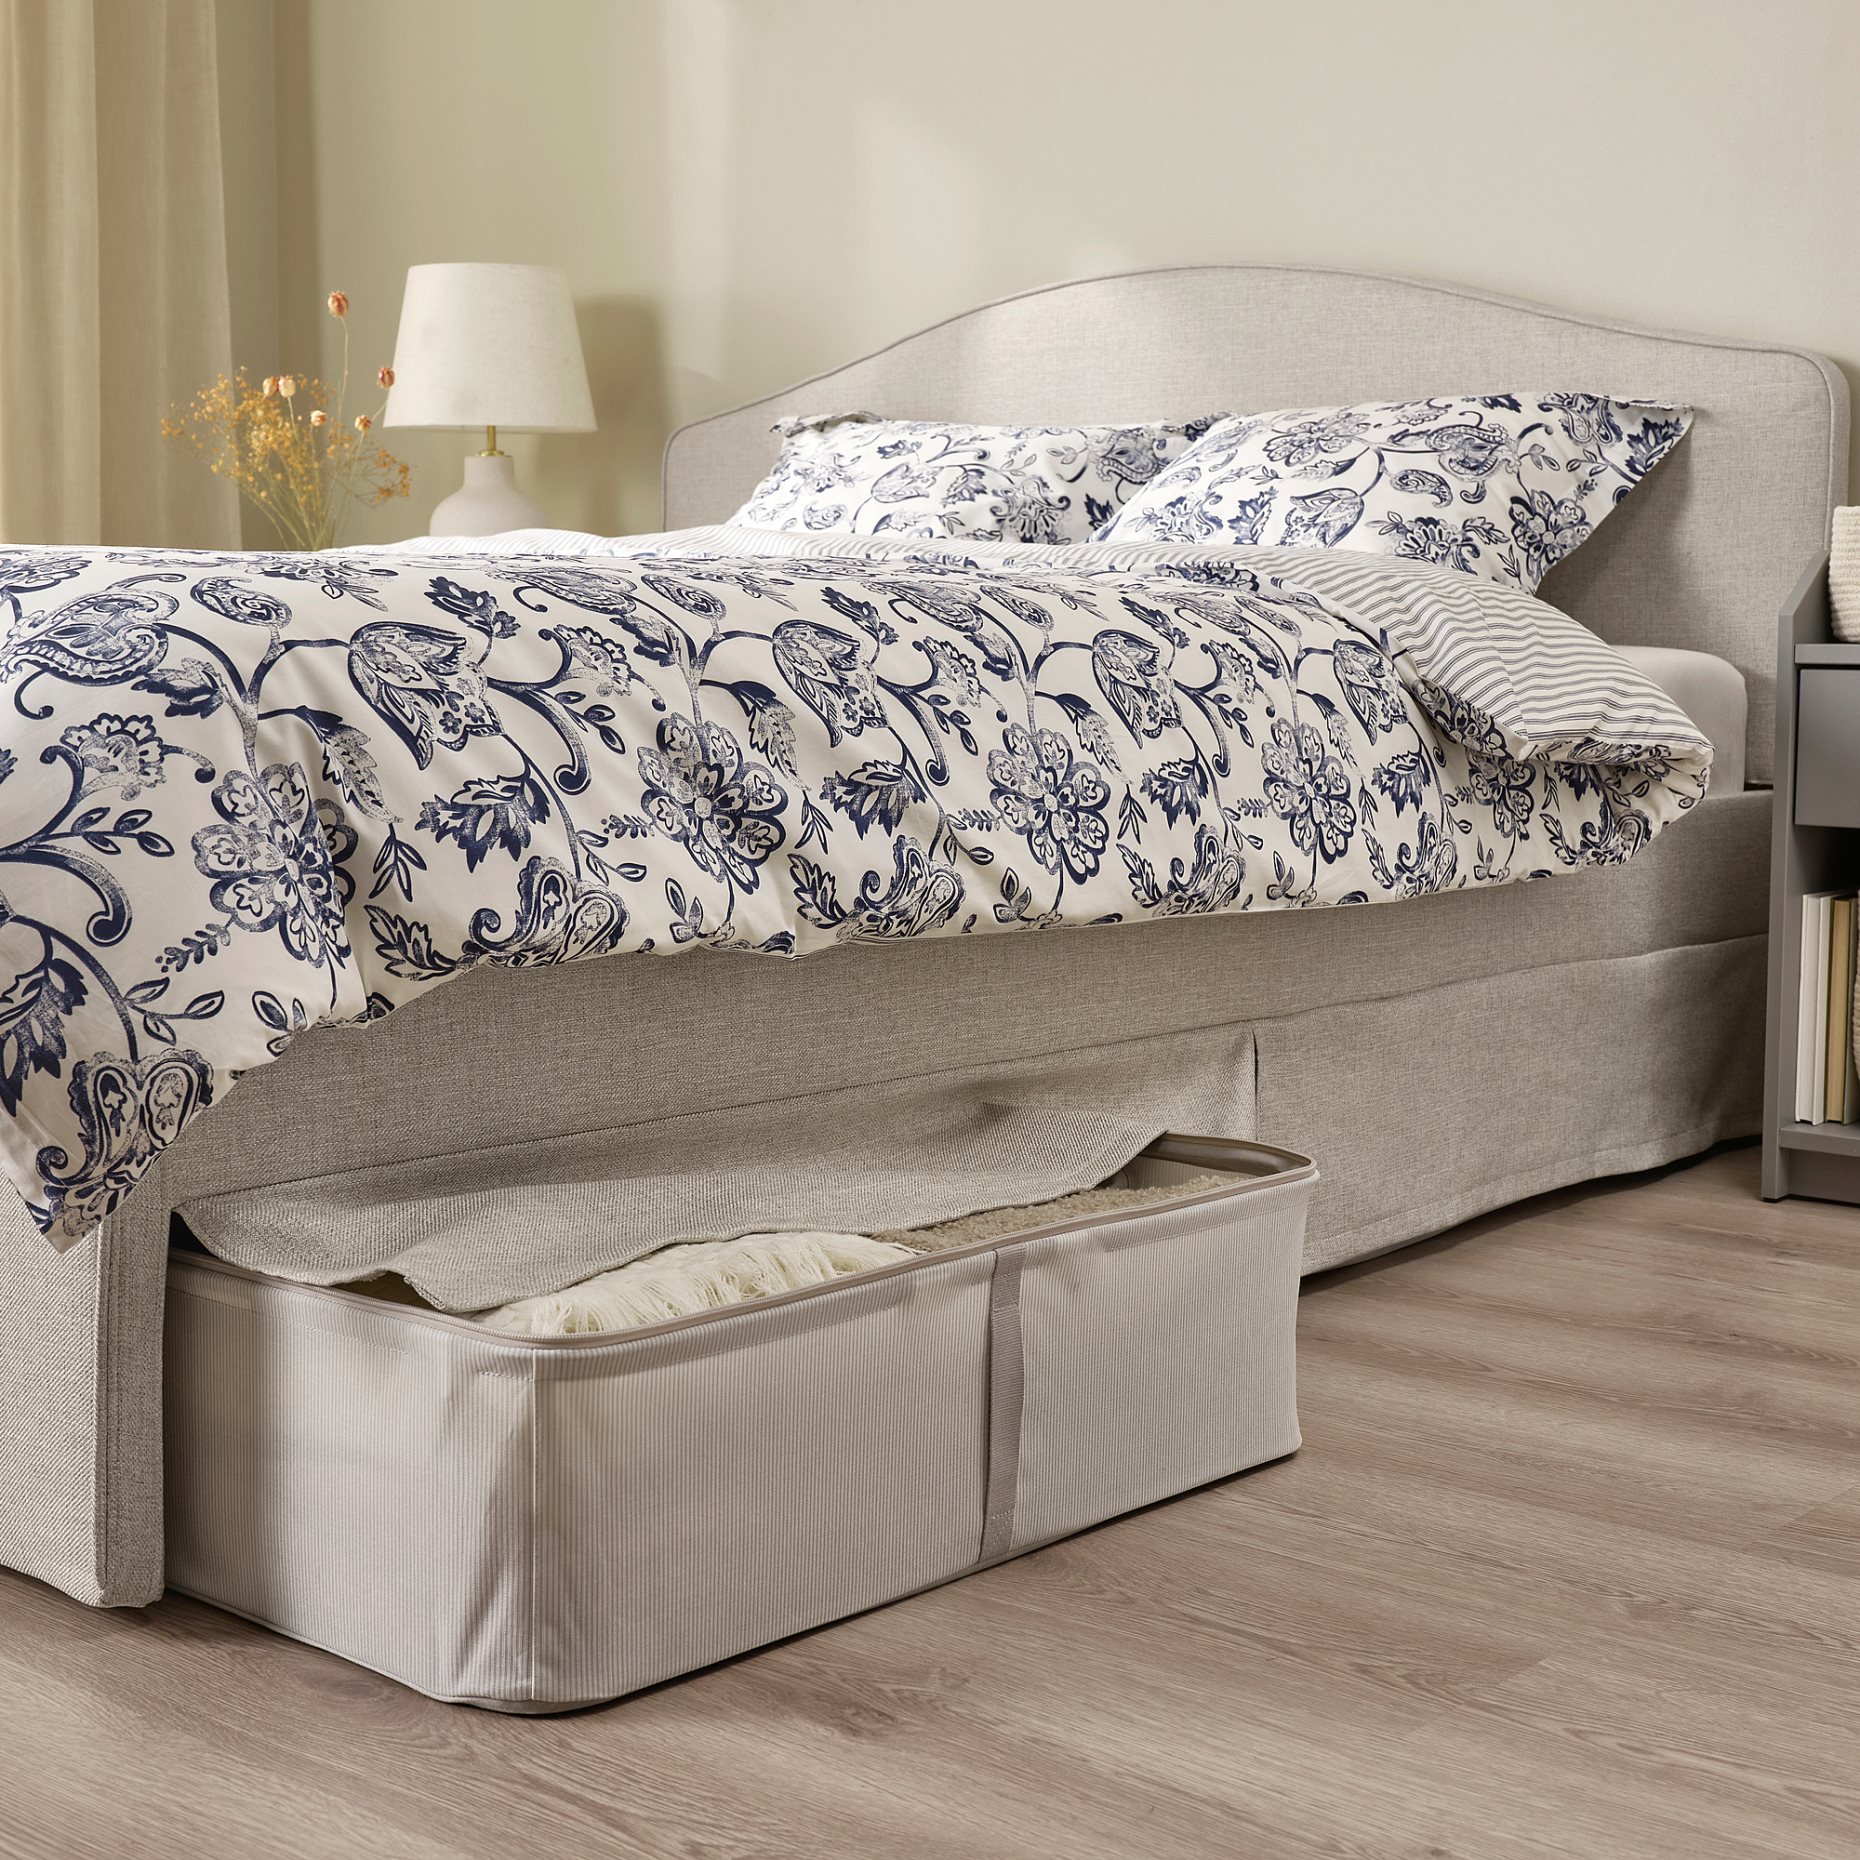 RAMNEFJALL, upholstered bed frame, 140x200 cm, 795.601.59